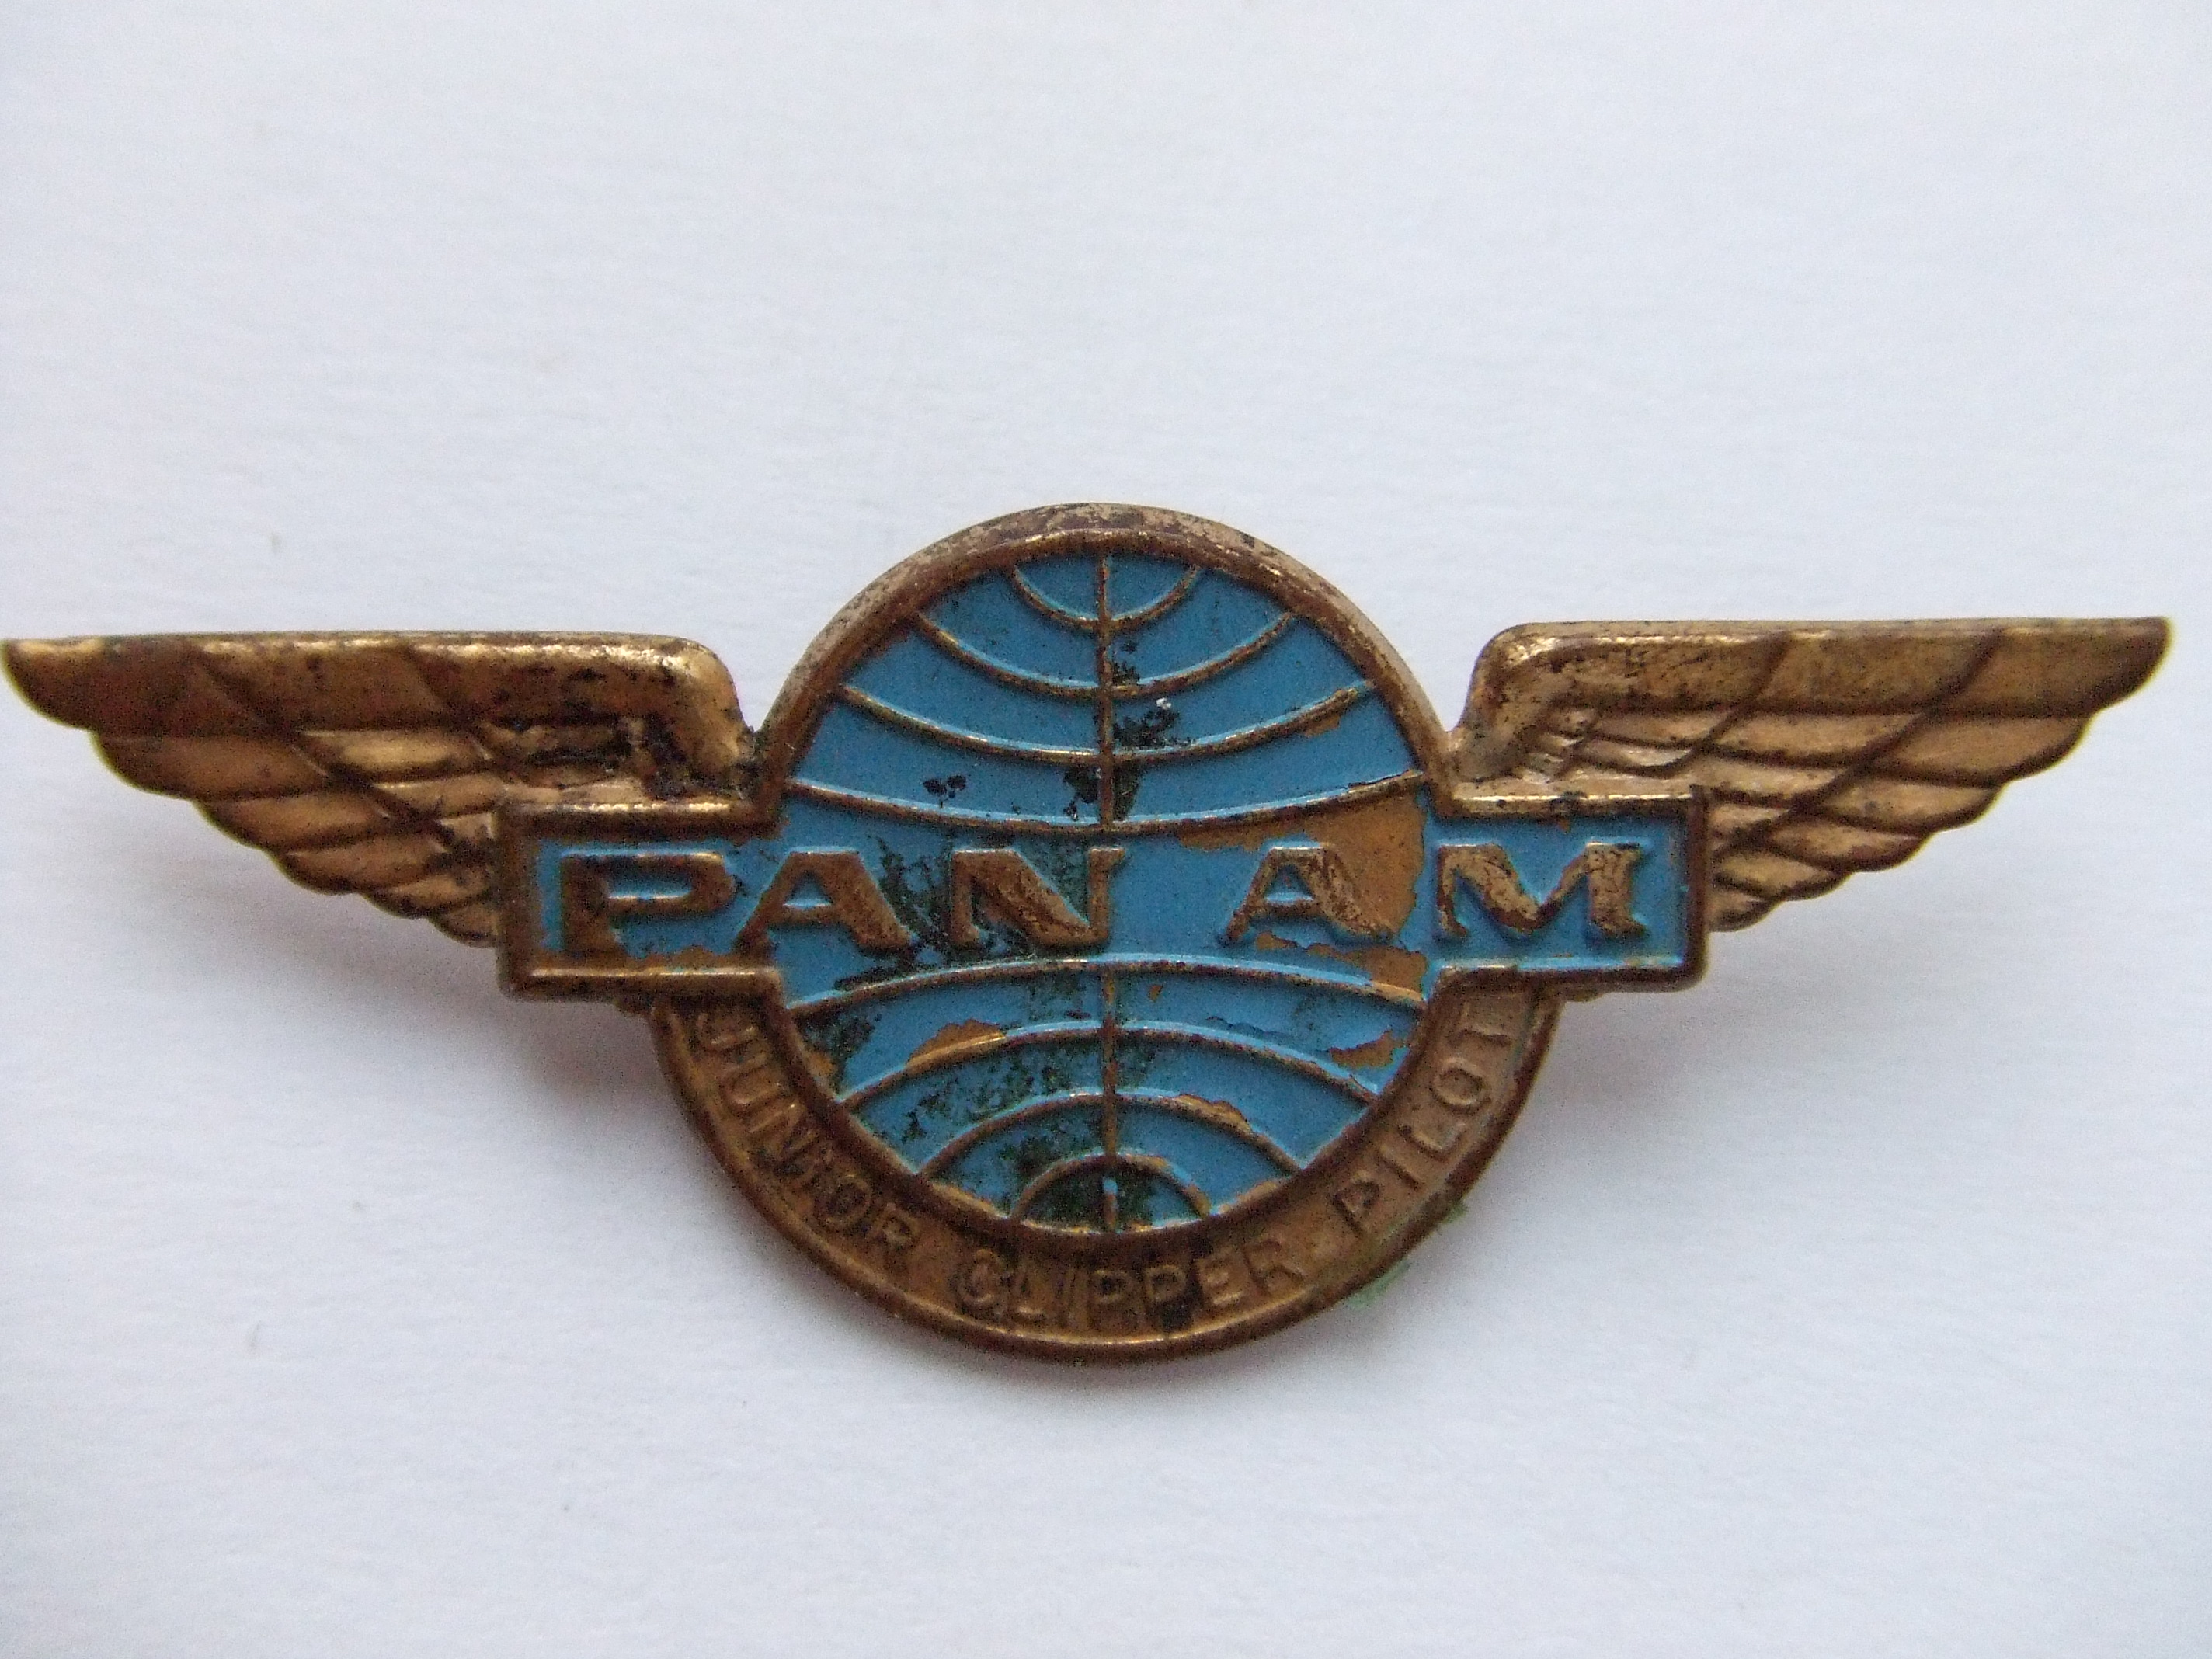 Pan Am junior clipper pilot wing